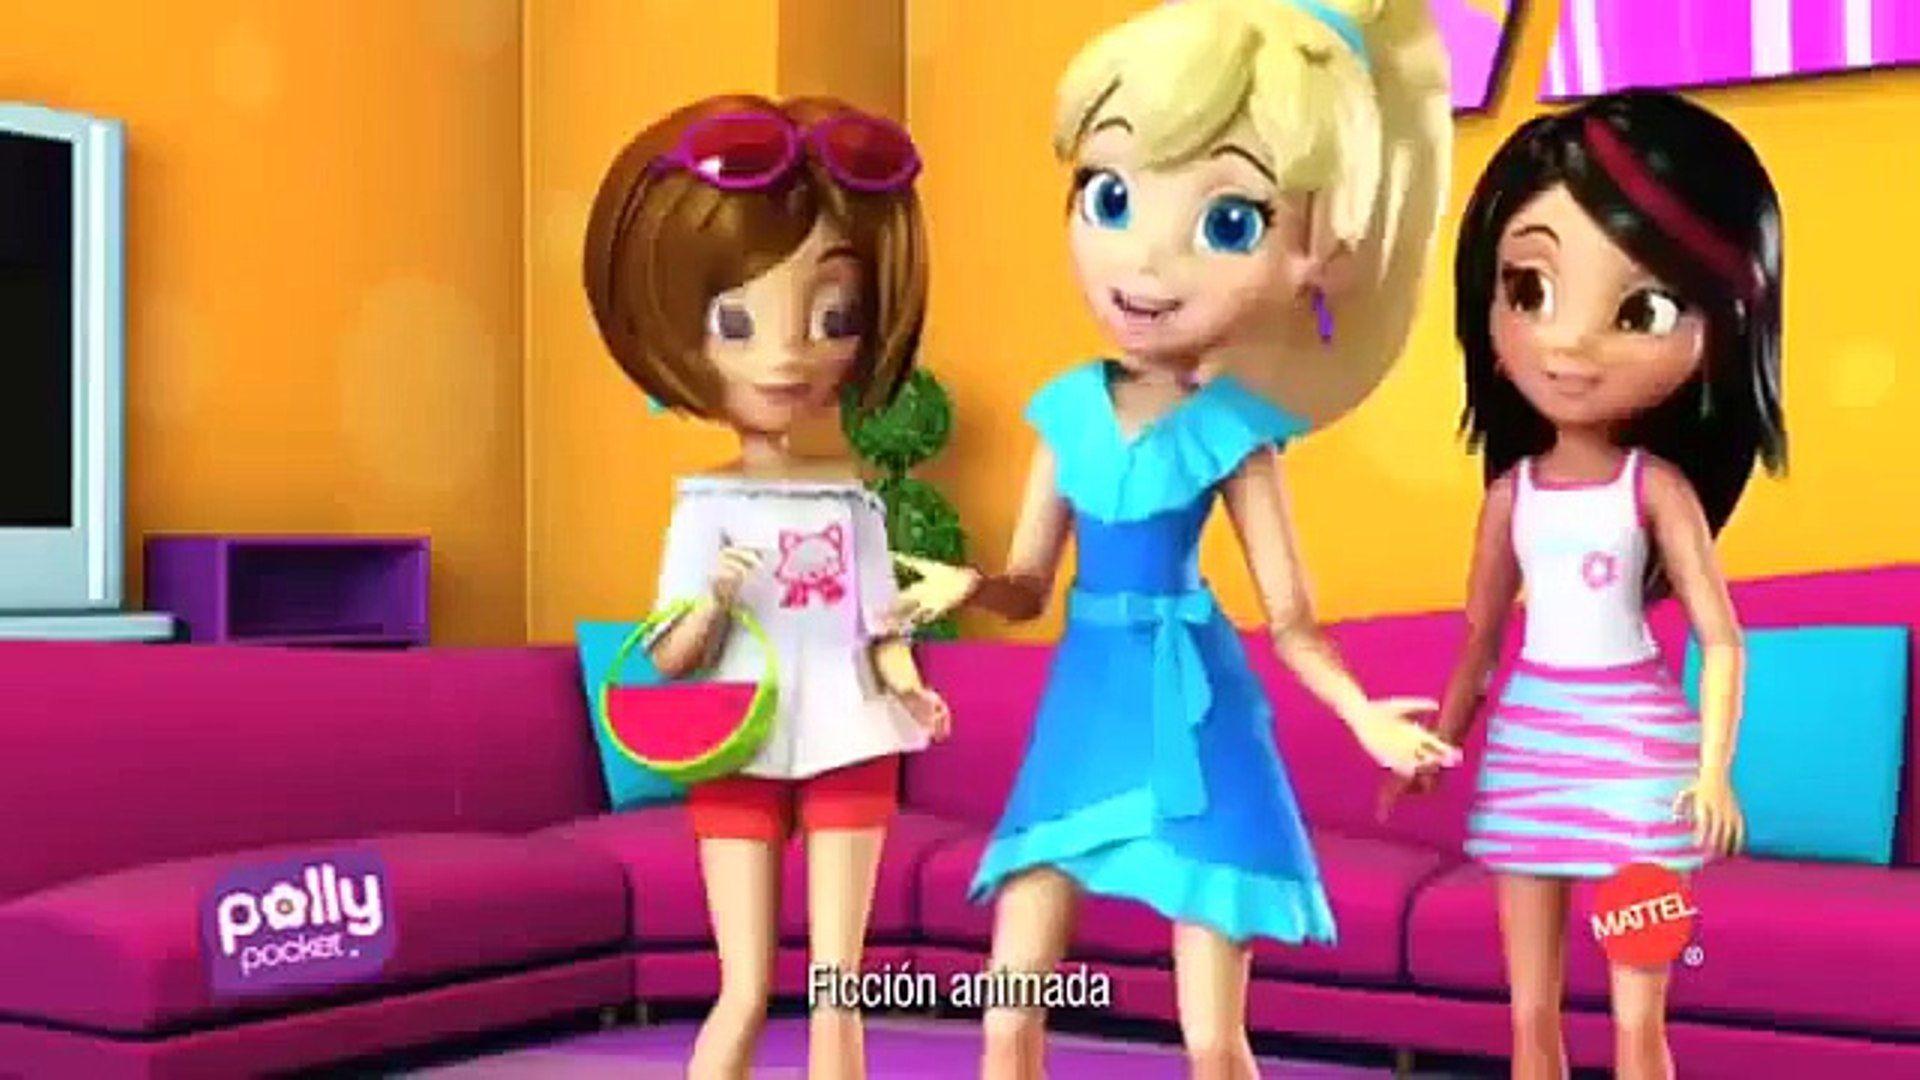 3D Cartoon Network of Anuncio Polly Pocket Casita Purpurina